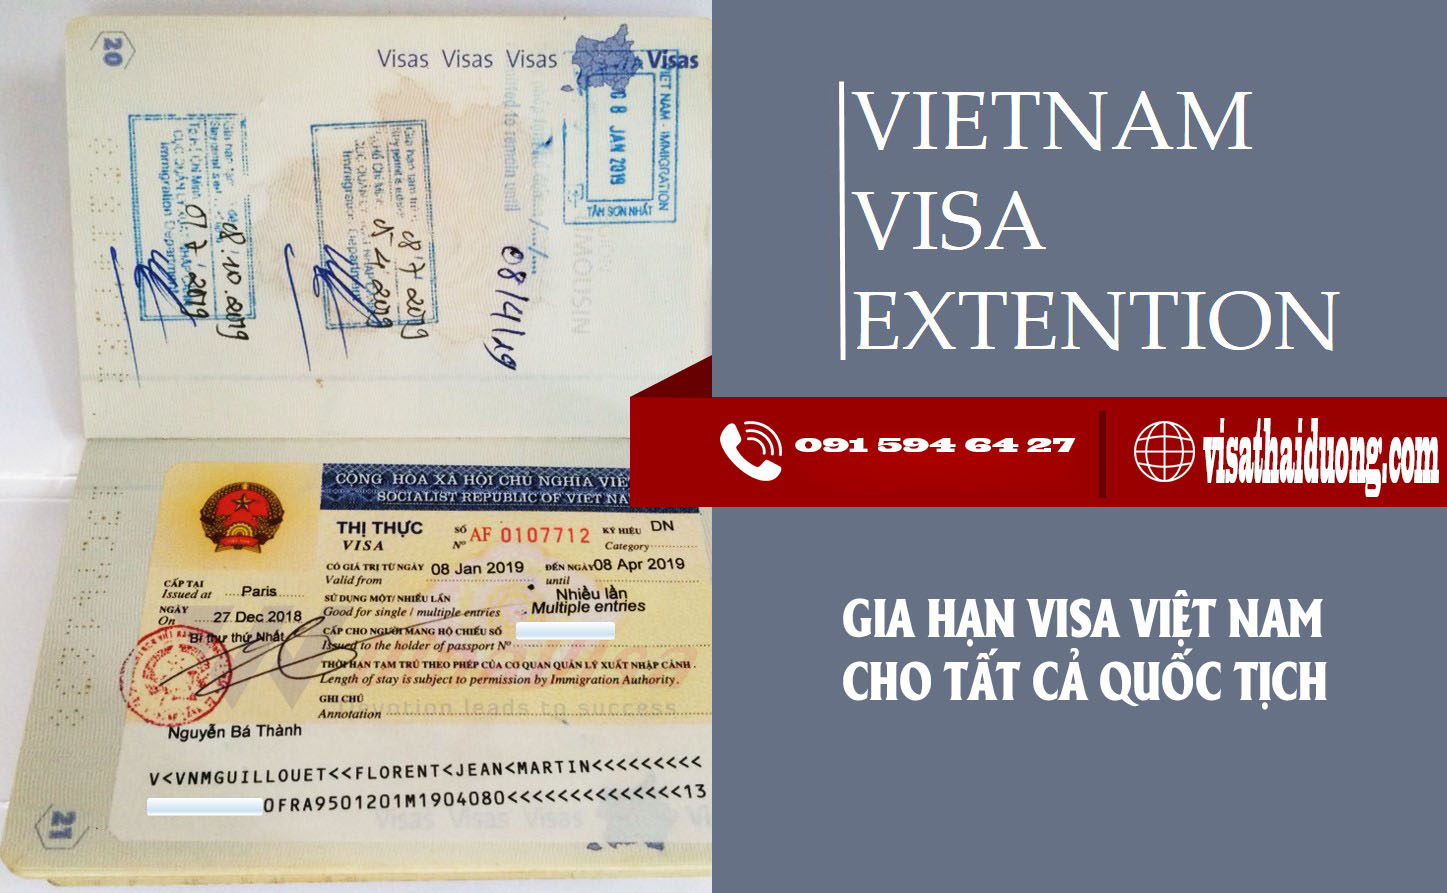 Fastest way to get Vietnam visa extension